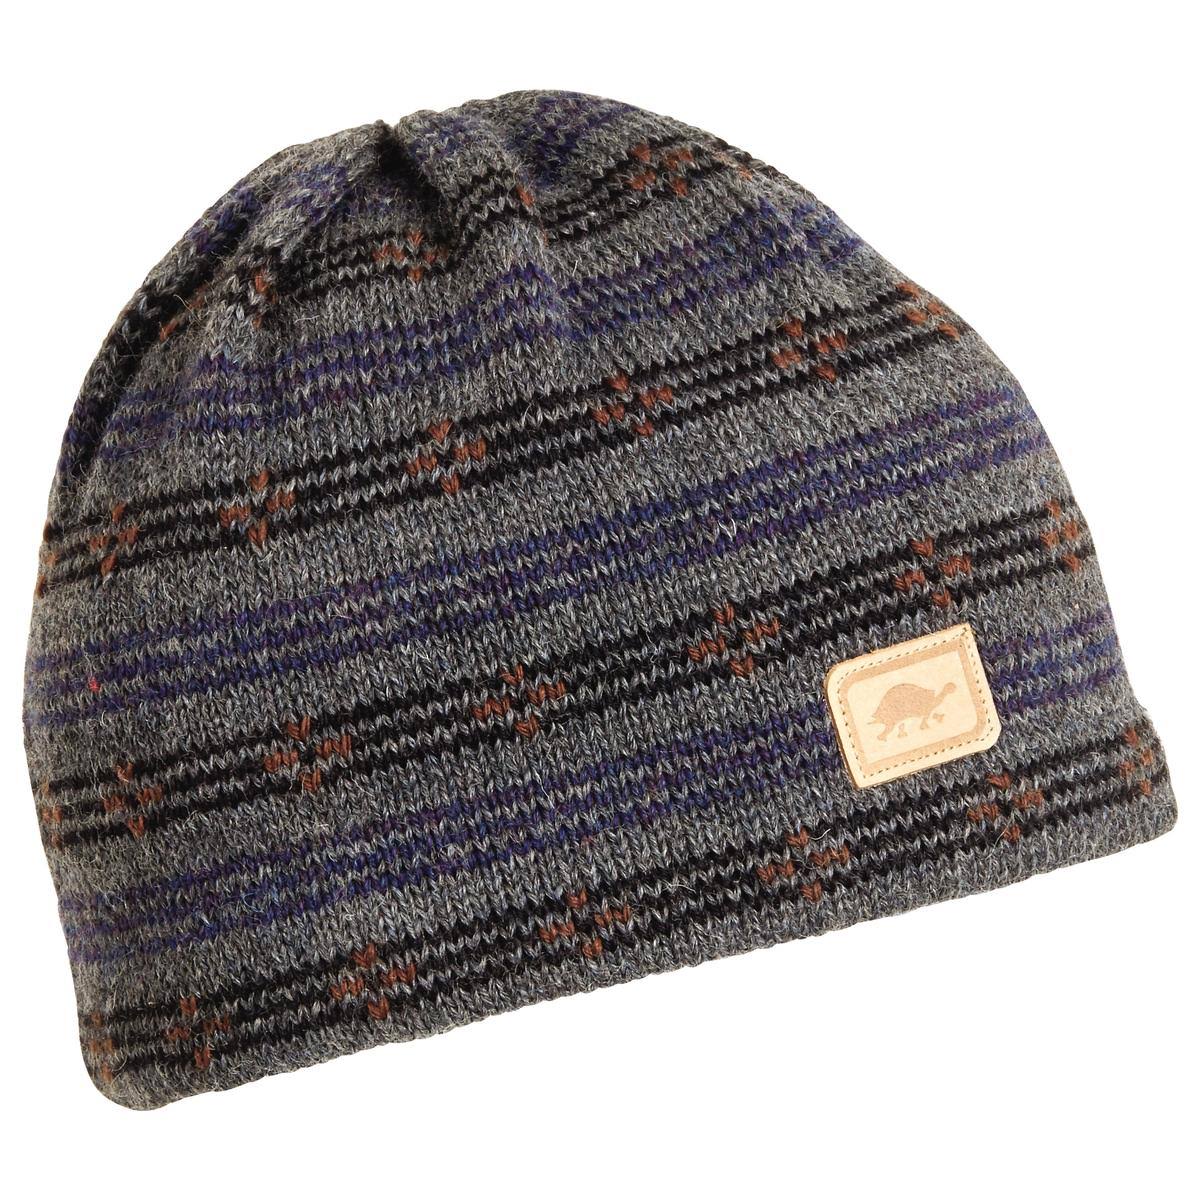 Turtle Fur Avalanche 100% Wool Knit Classic Ski Beanie Hat - Charcoal